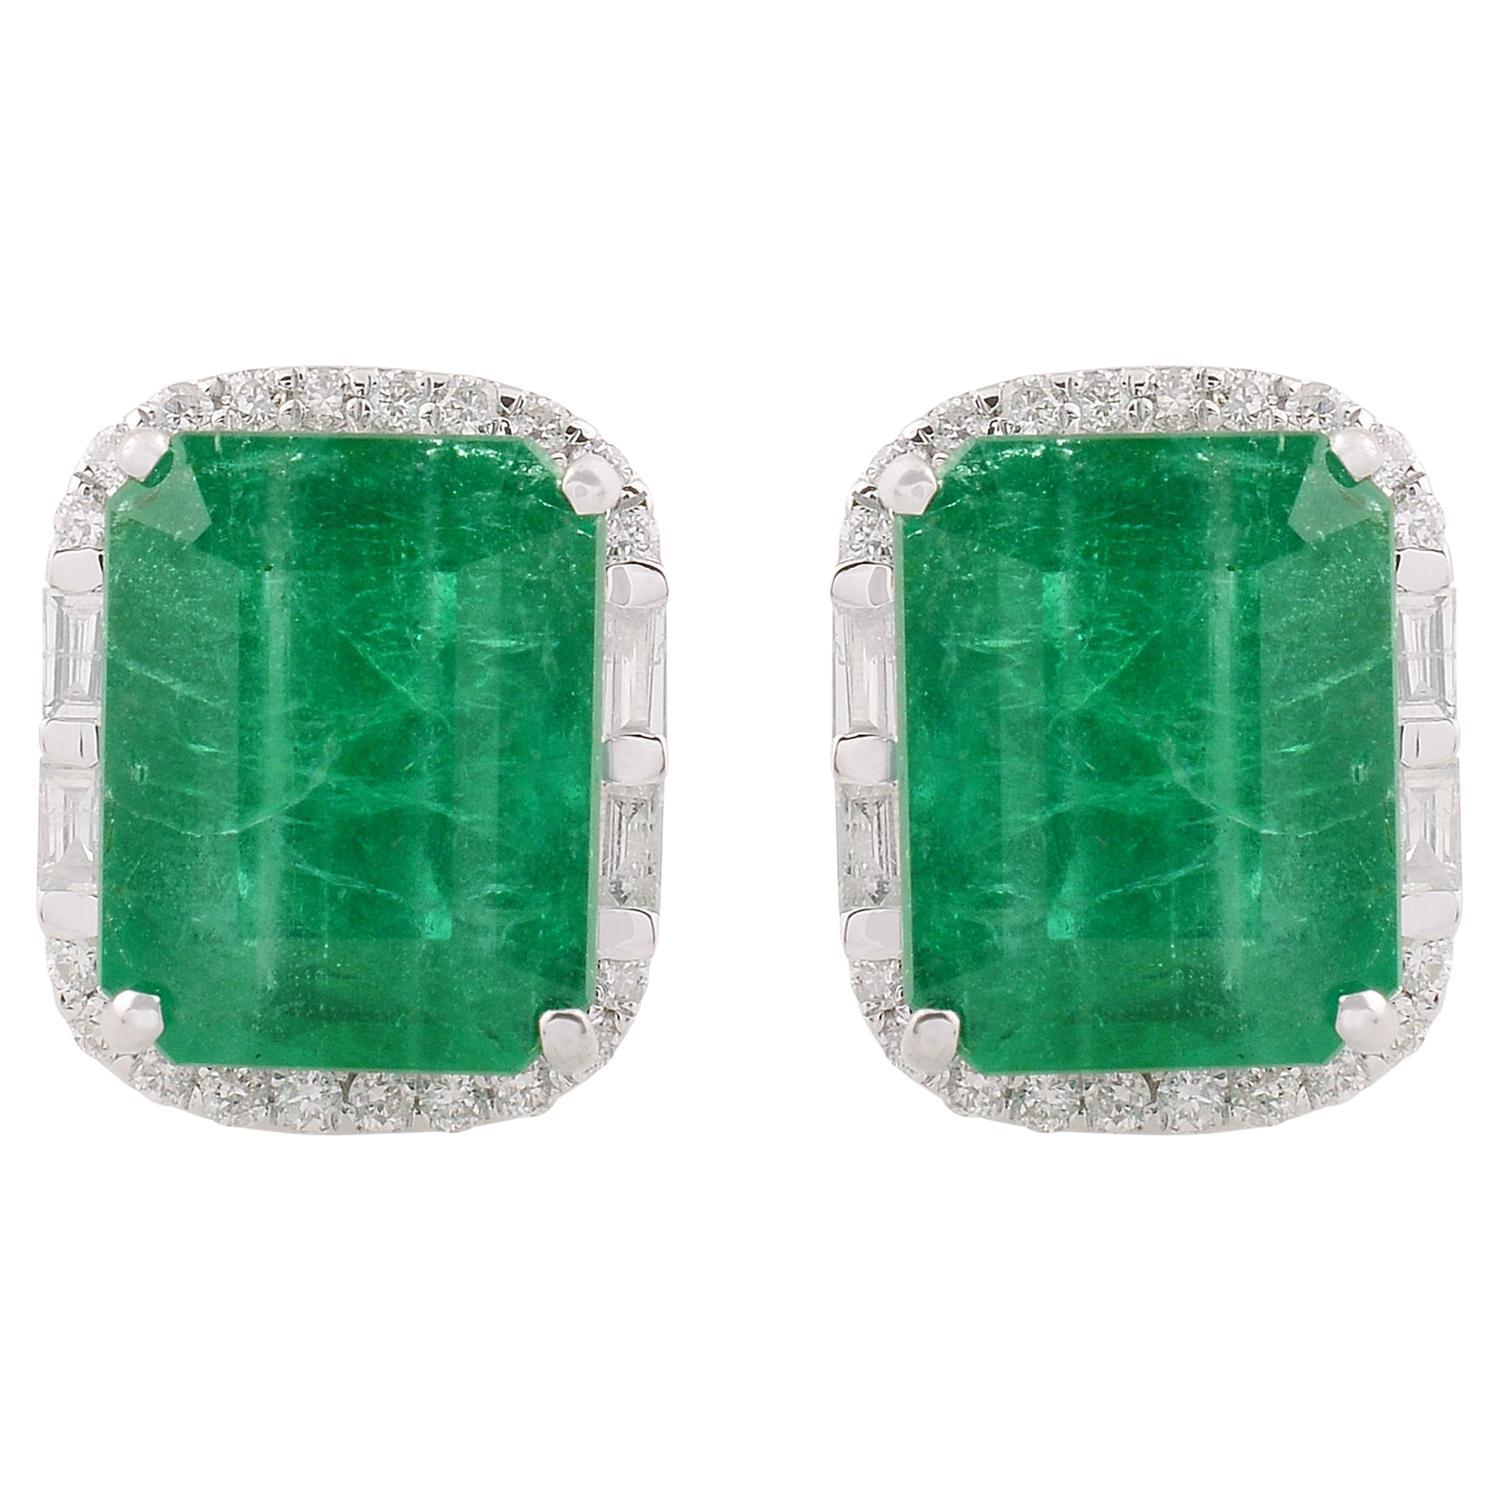 Zambian Emerald Stud Earrings SI Clarity HI Color Diamond 14k White Gold Jewelry For Sale